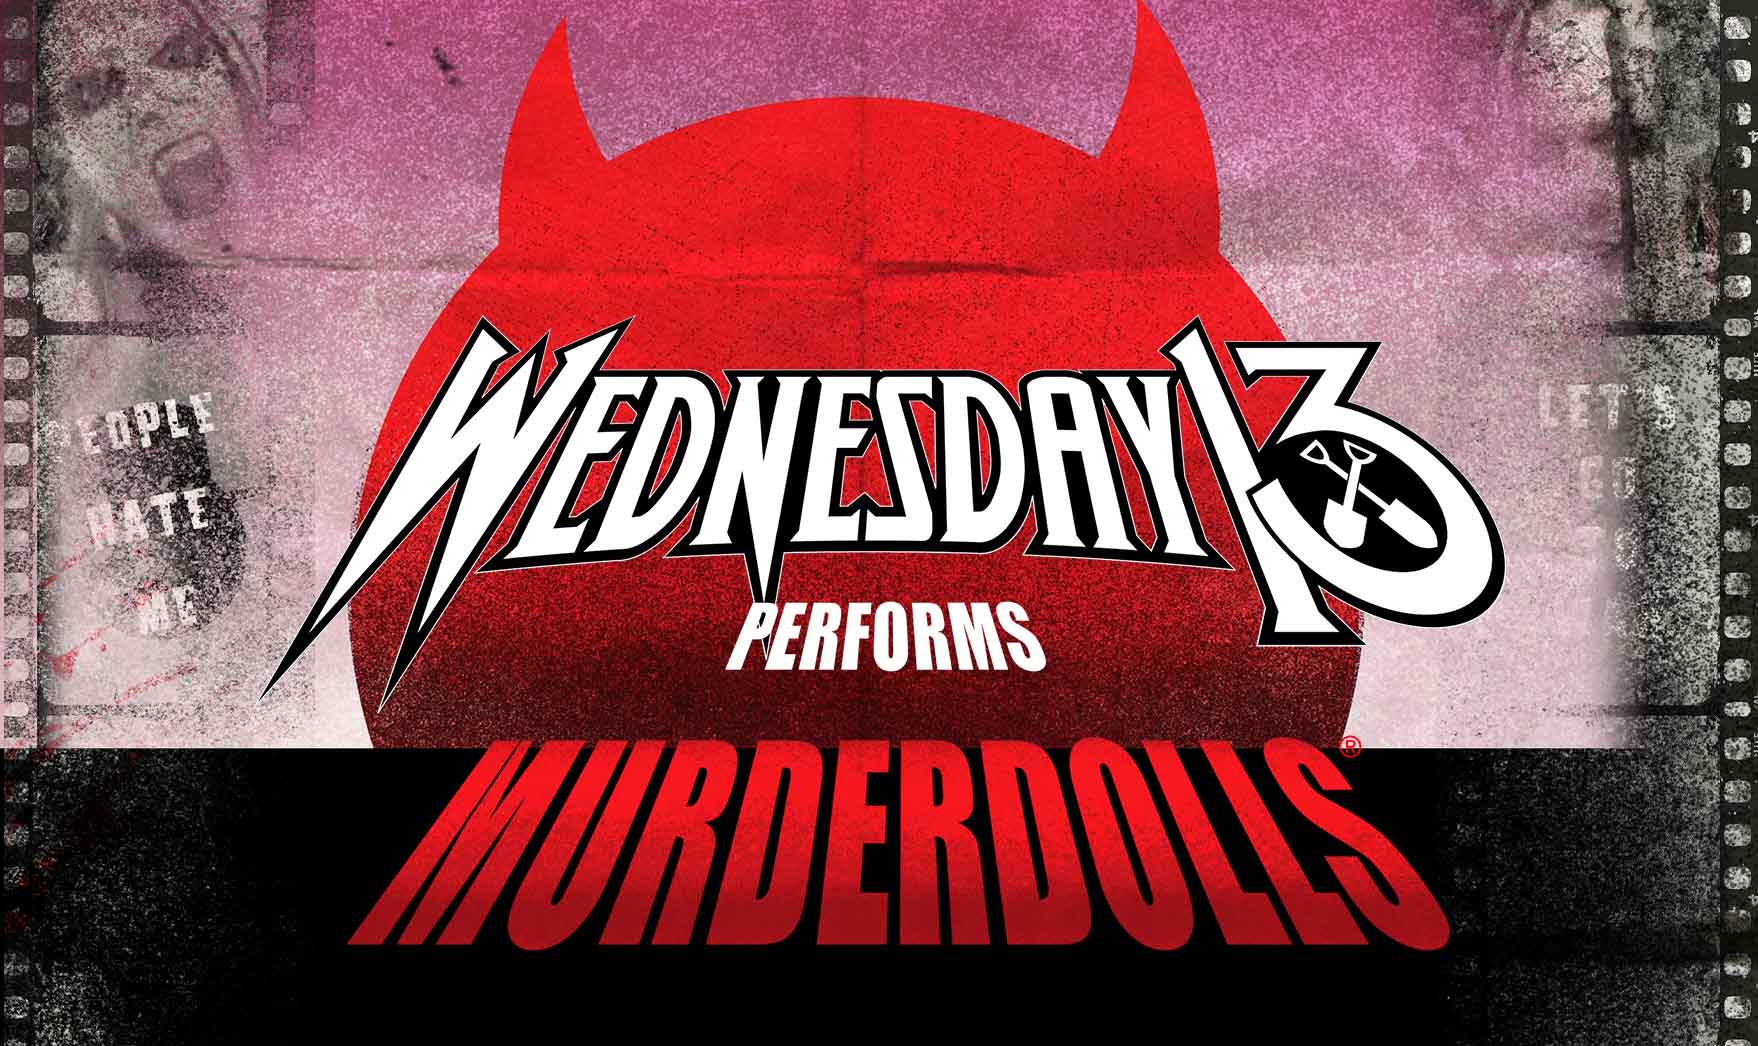 Wednesday 13 Performing Murderdolls at Thekla Tickets